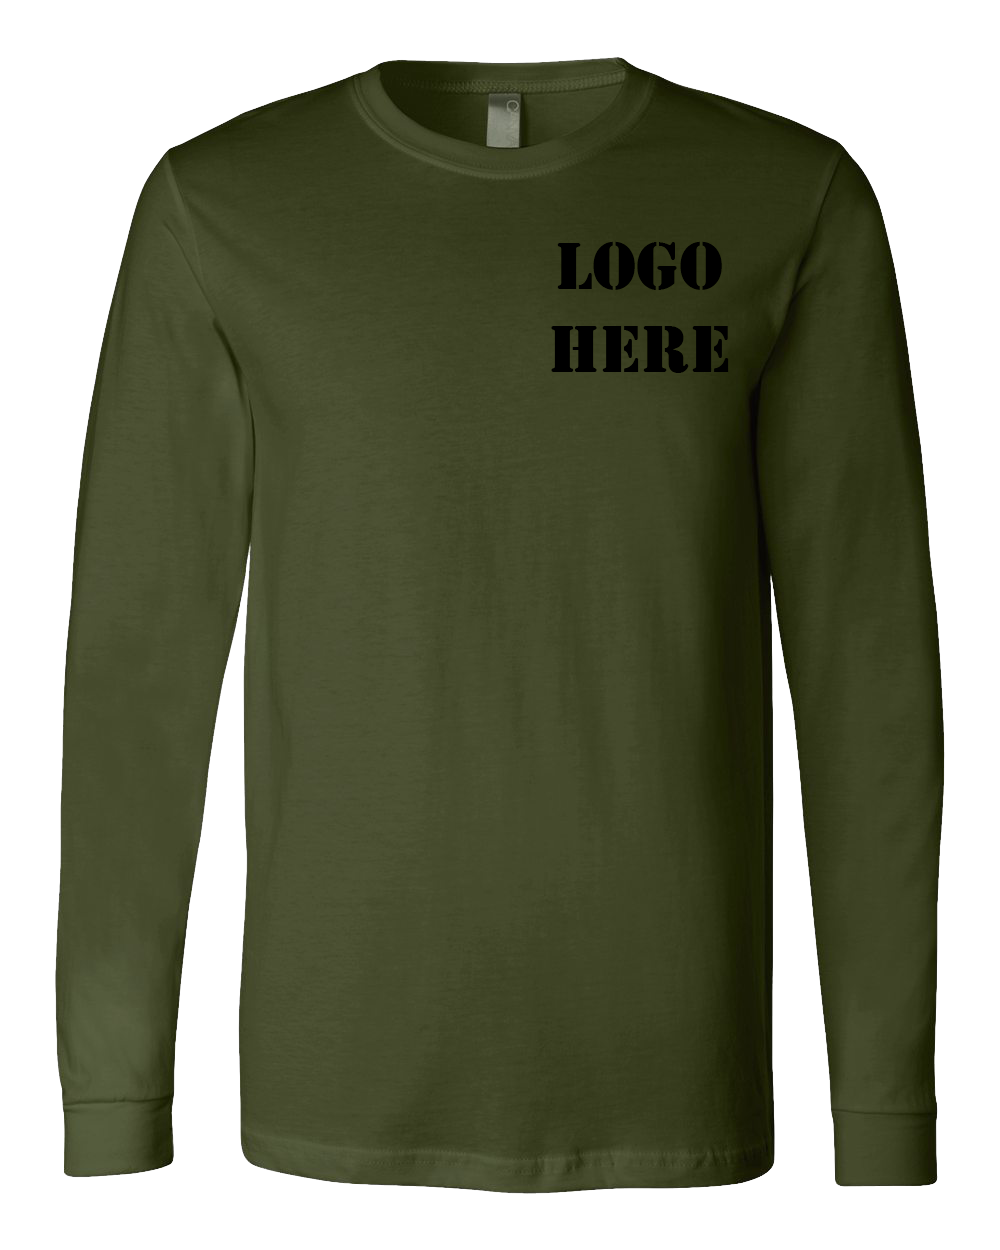 Long Sleeve Olive Drab Dri-Fit T-Shirt